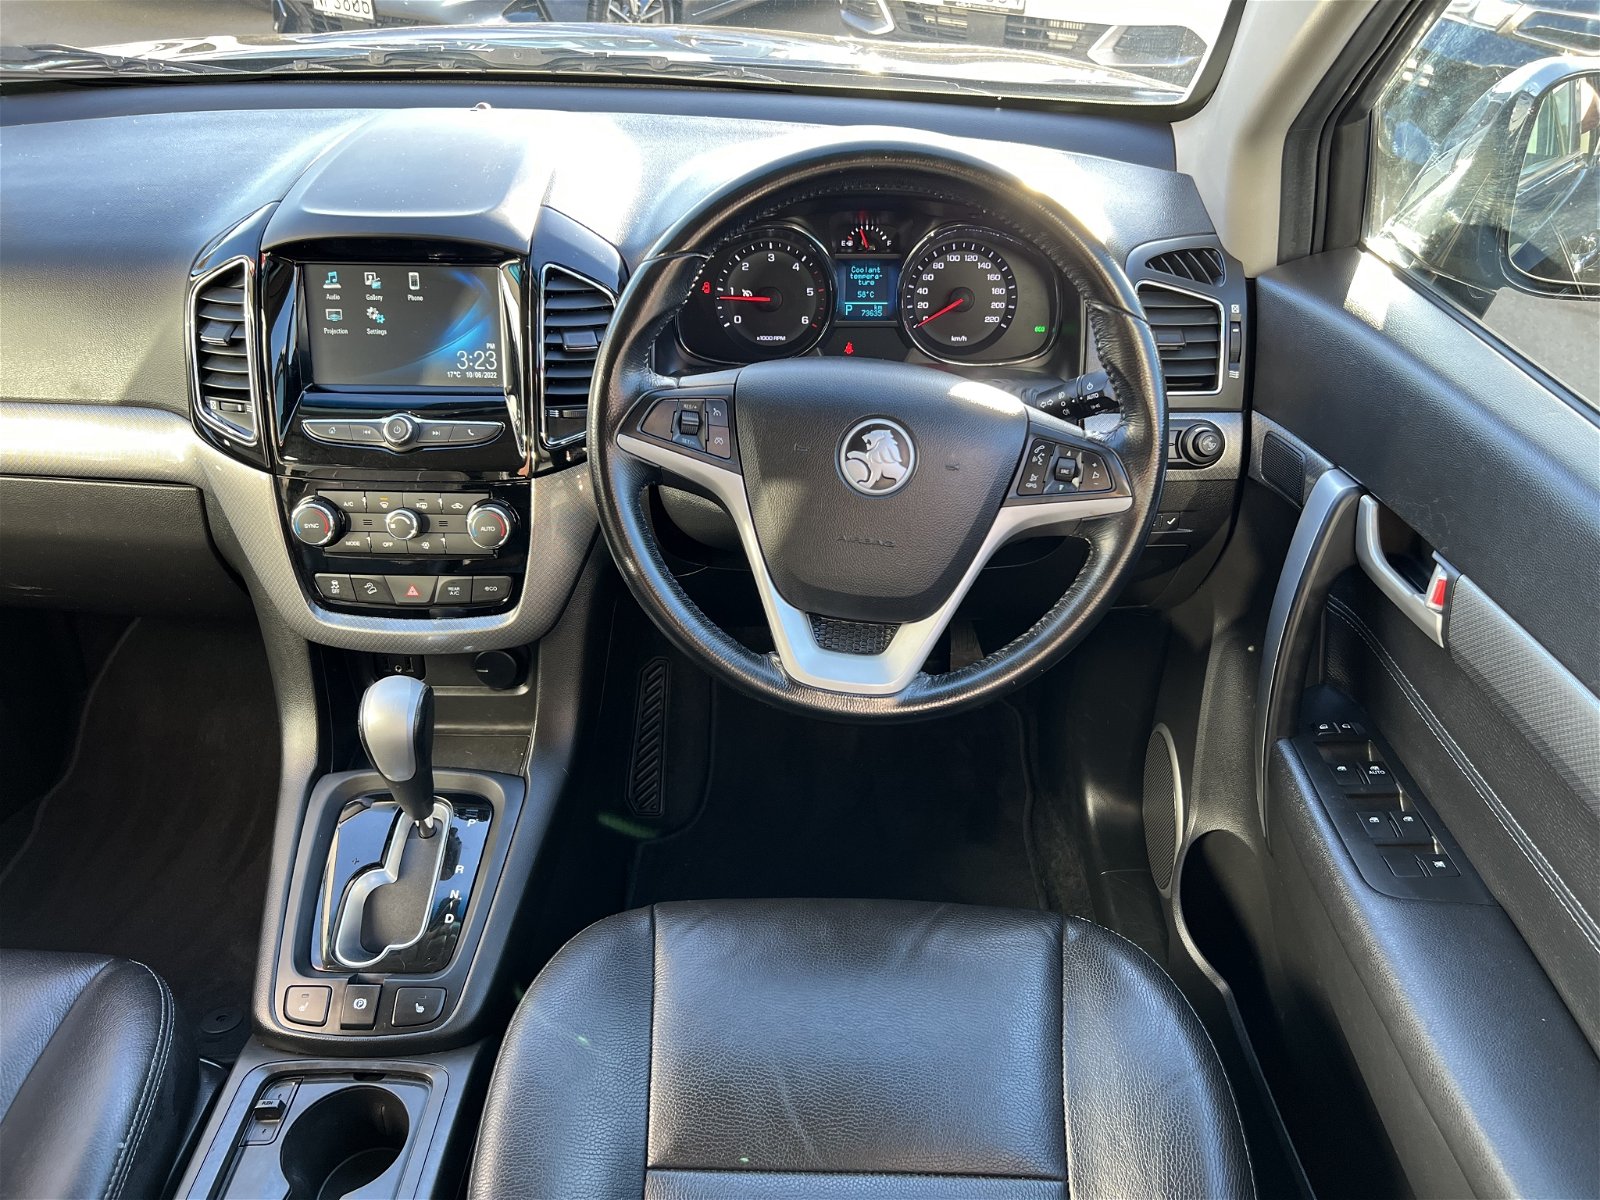 2018 Holden Captiva LTZ 2.2 AWD